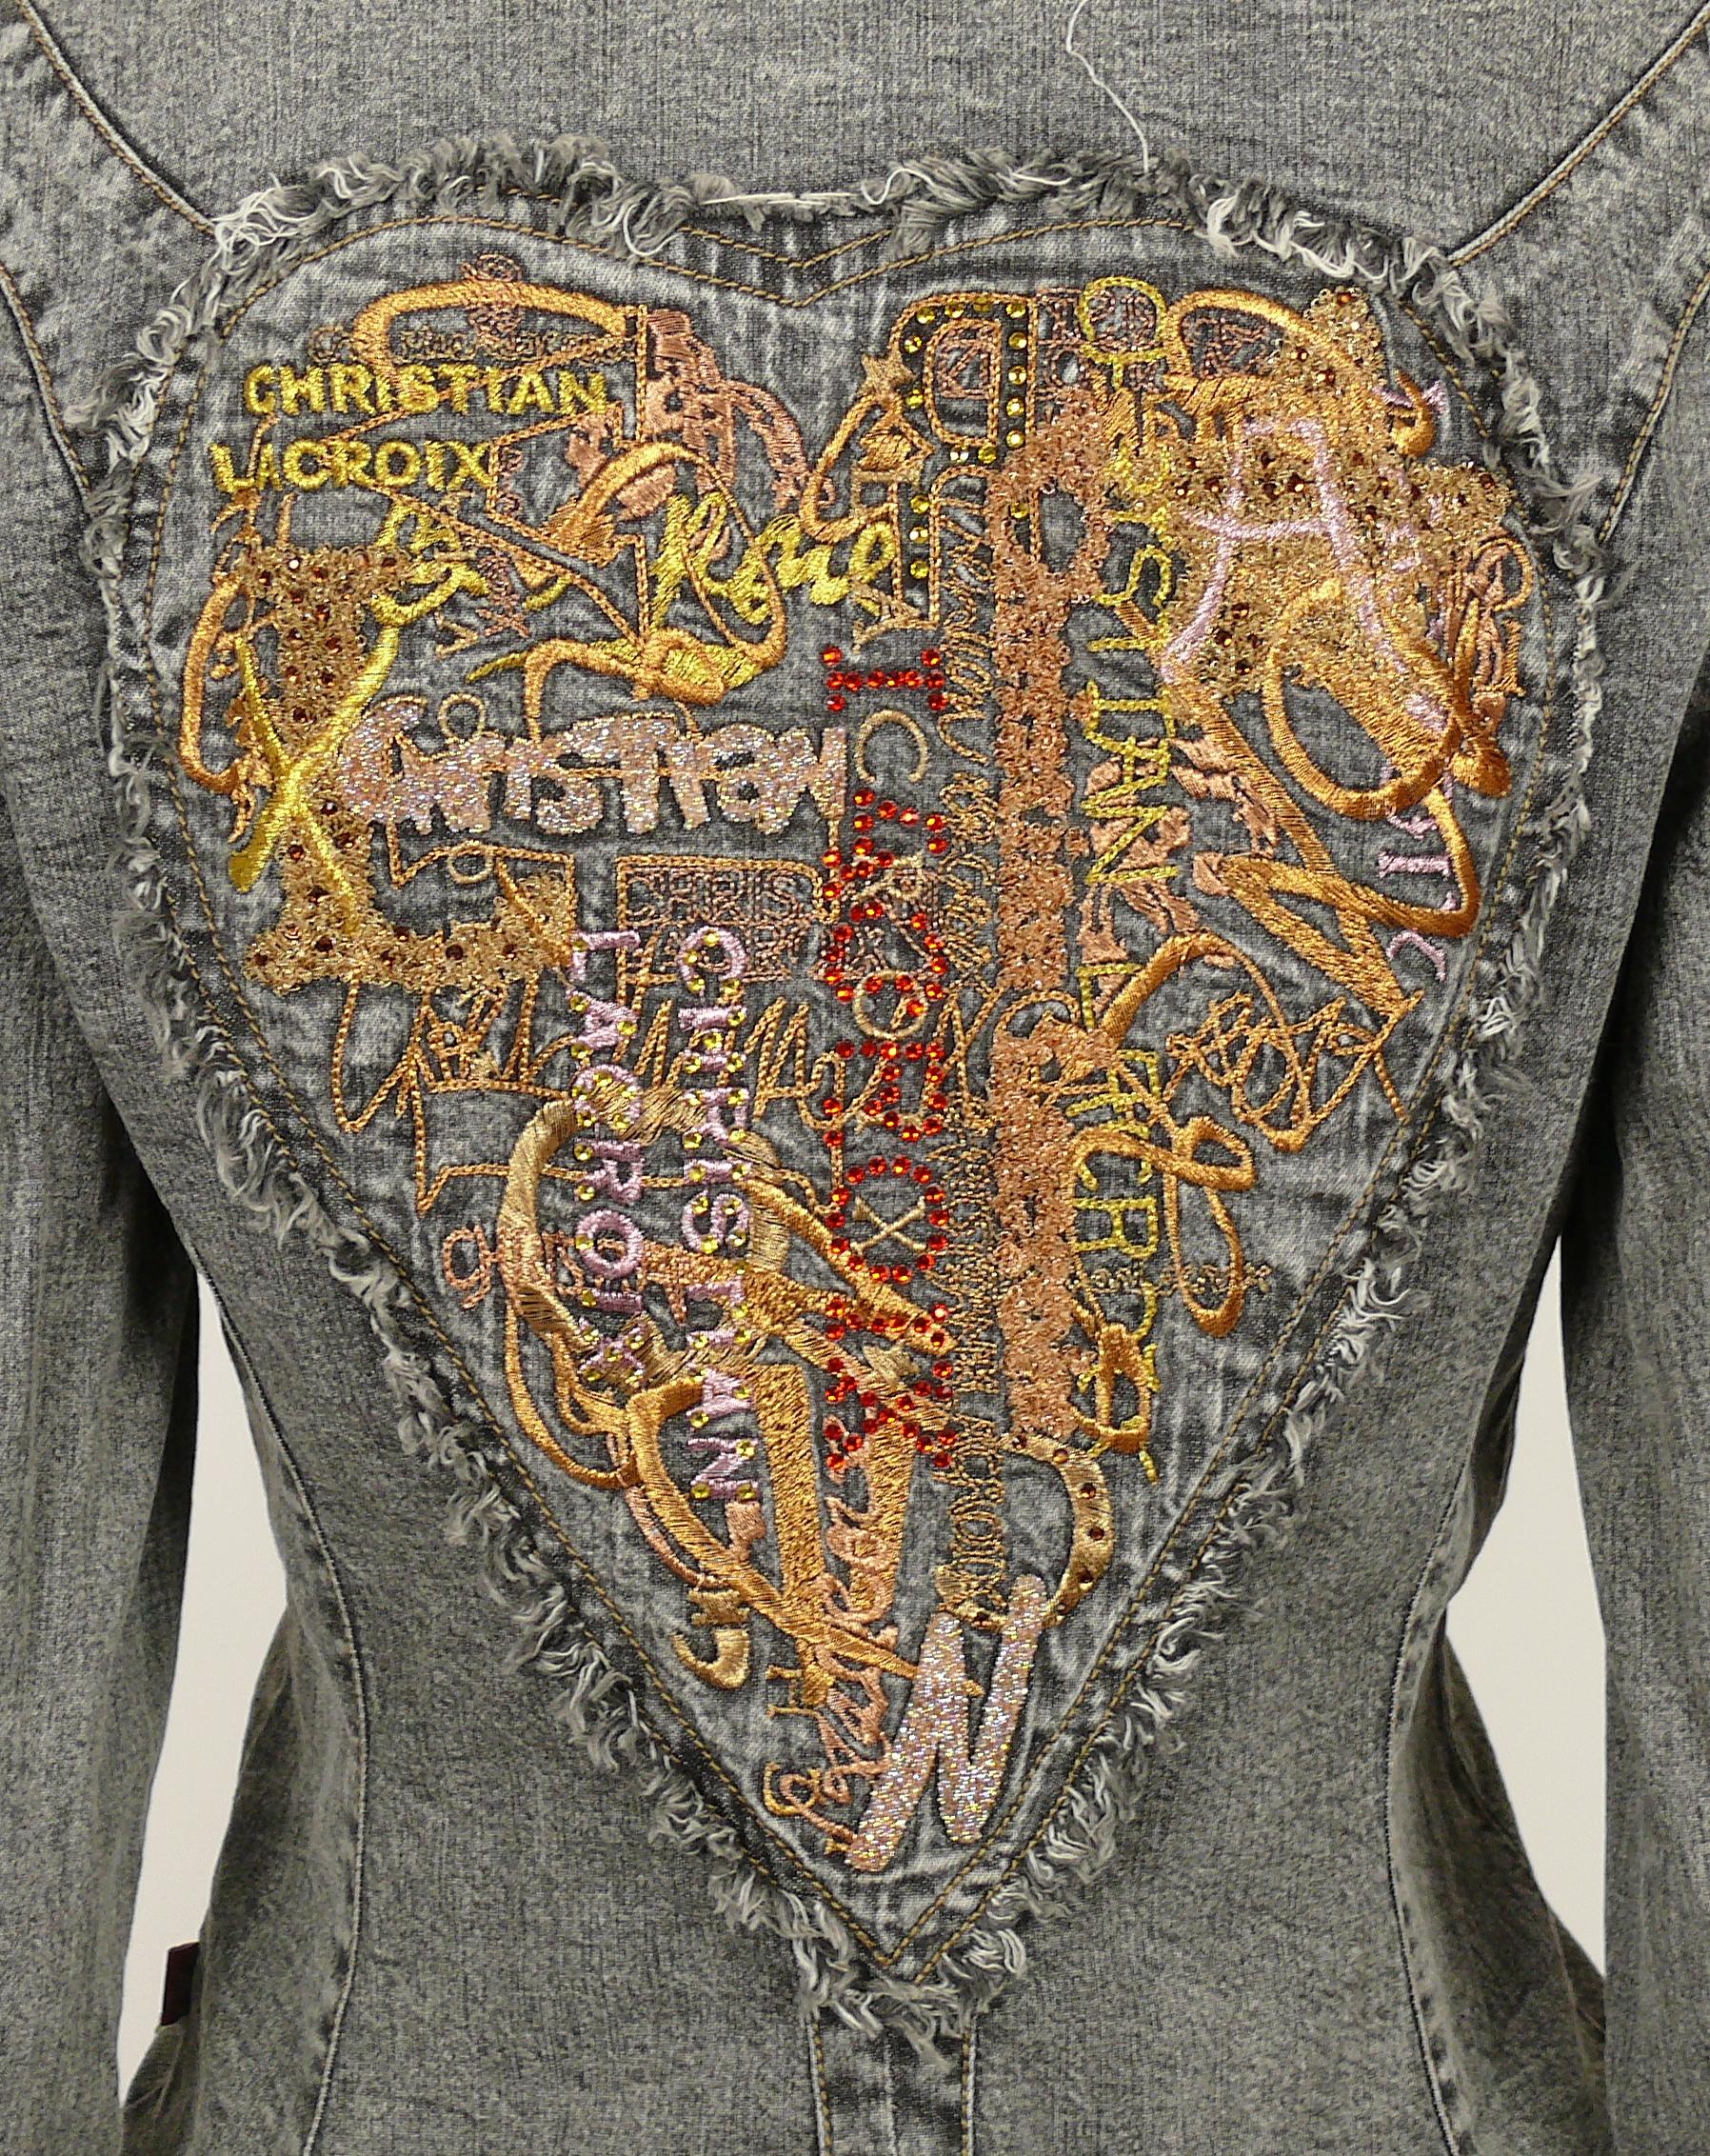 Black Christian Lacroix Jeans Vintage Embroidered Heart Denim Jacket & Trousers For Sale